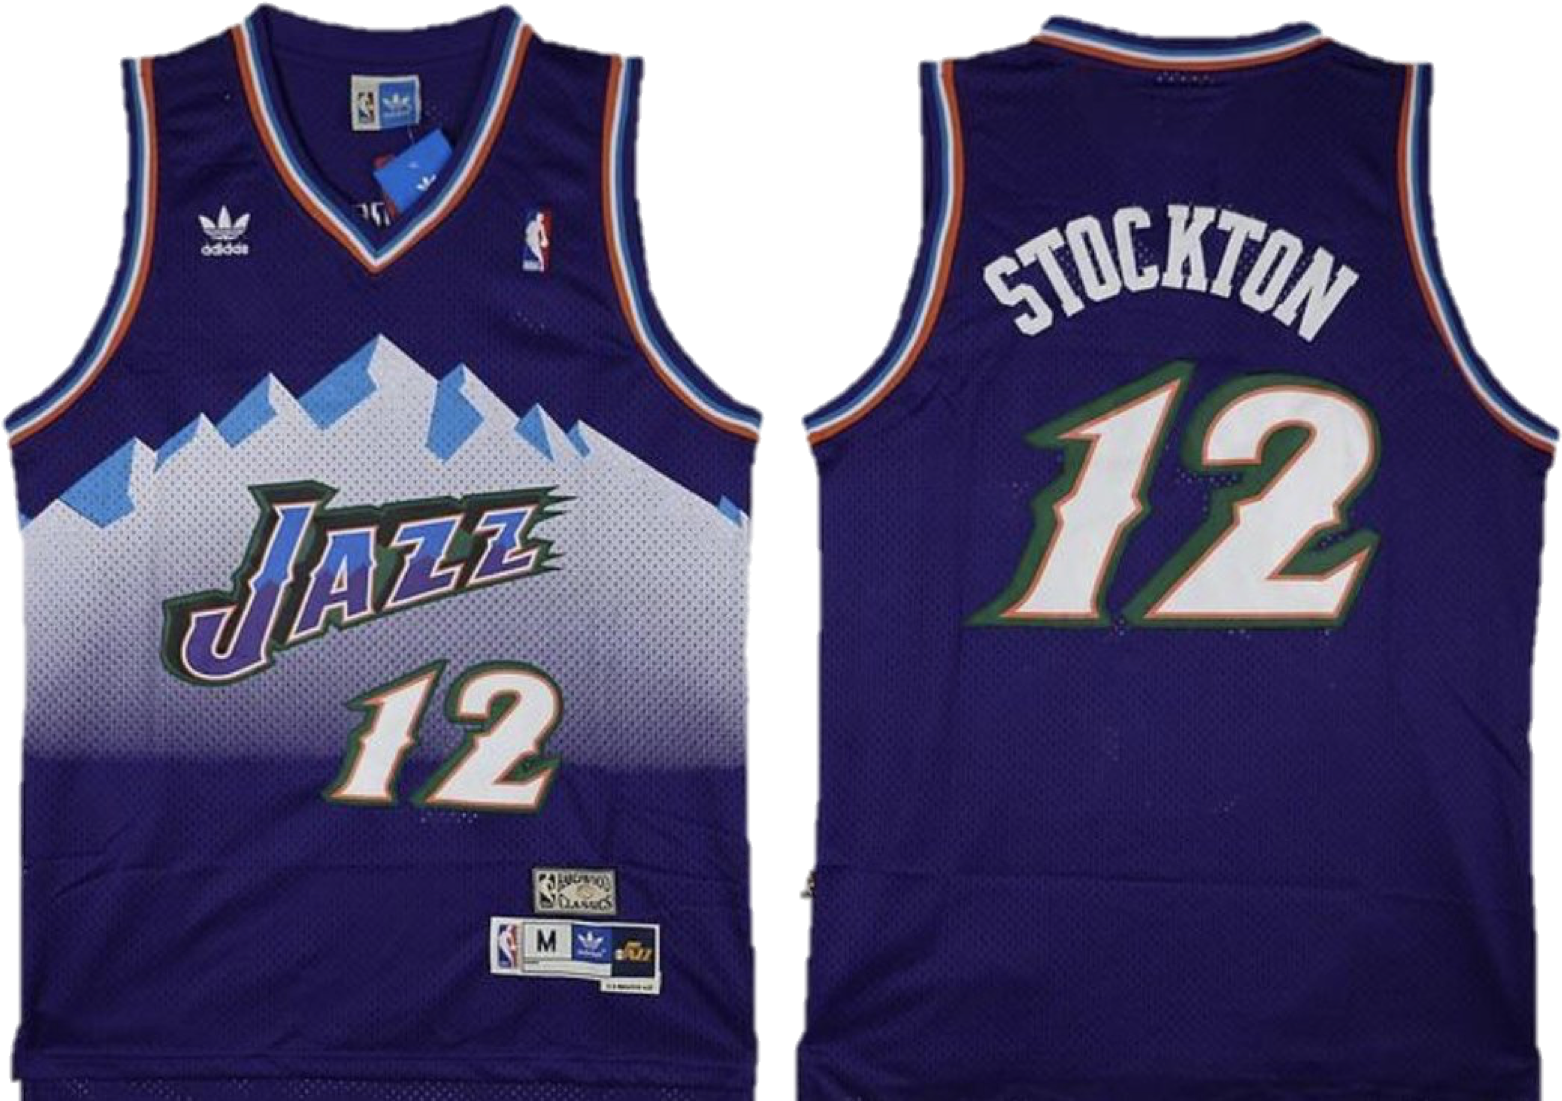 Utah Jazz Stockton12 Jersey